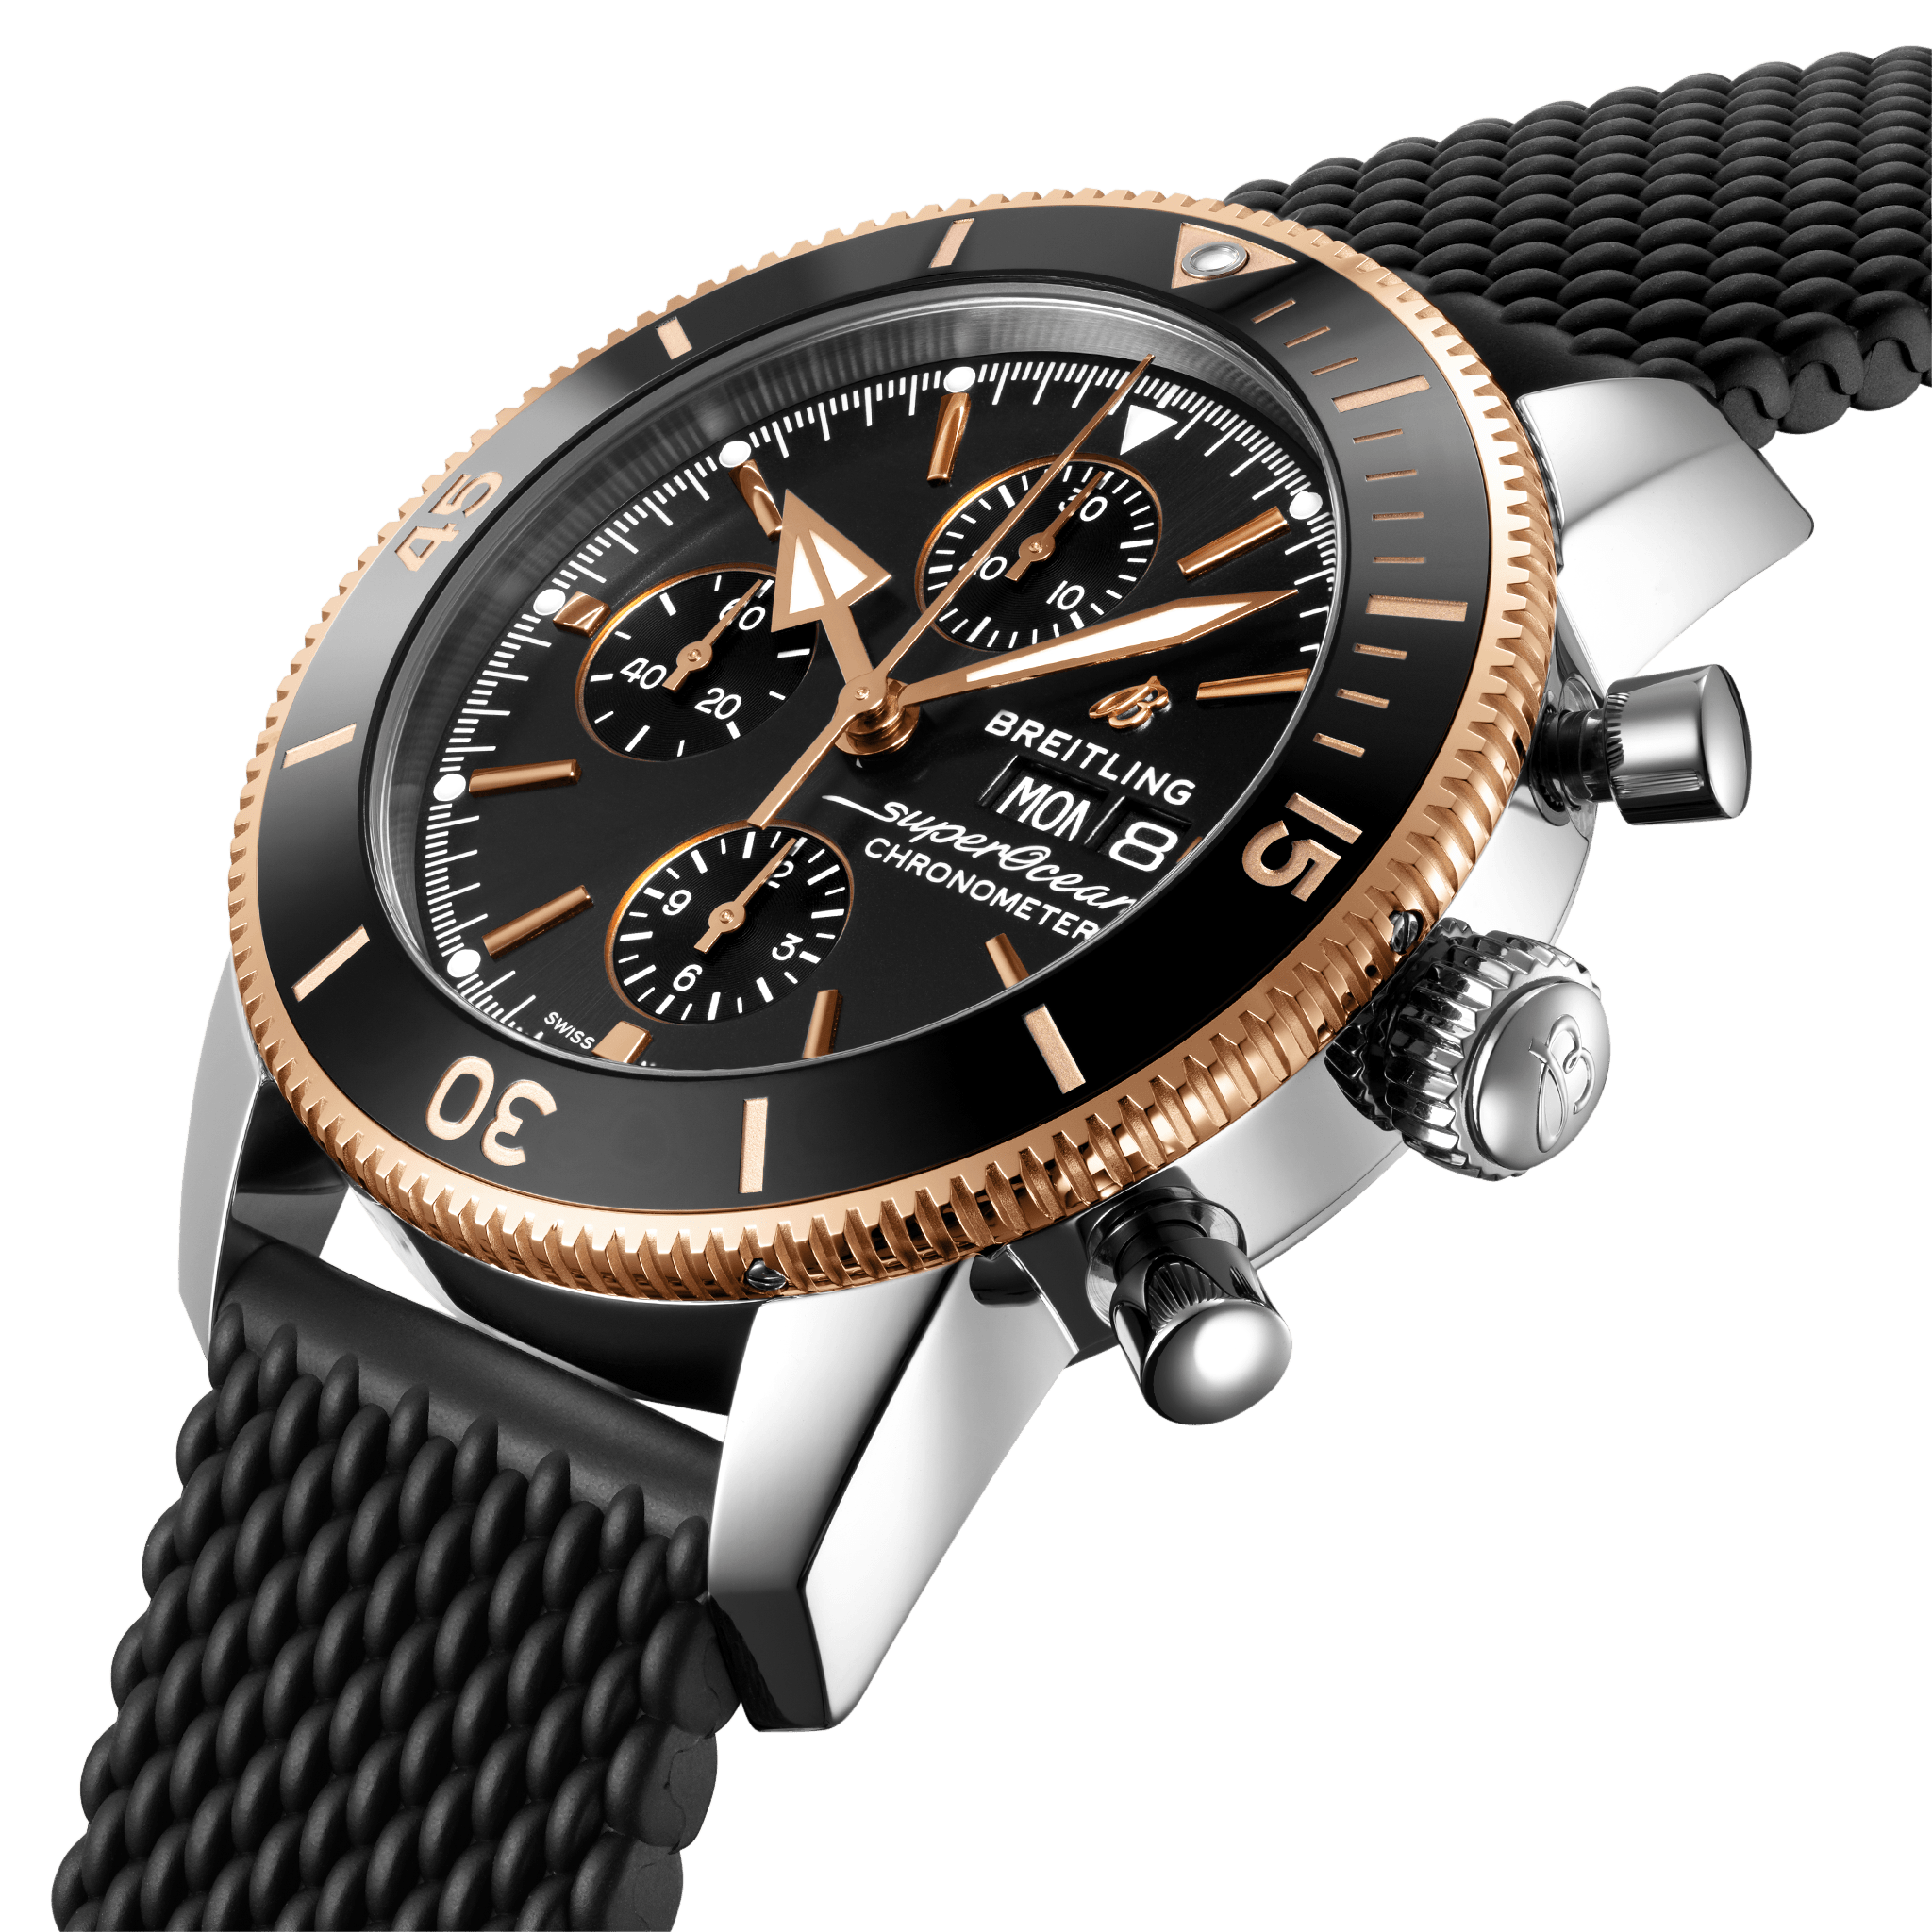 Breitling Superocean Heritage Chronograph Watch